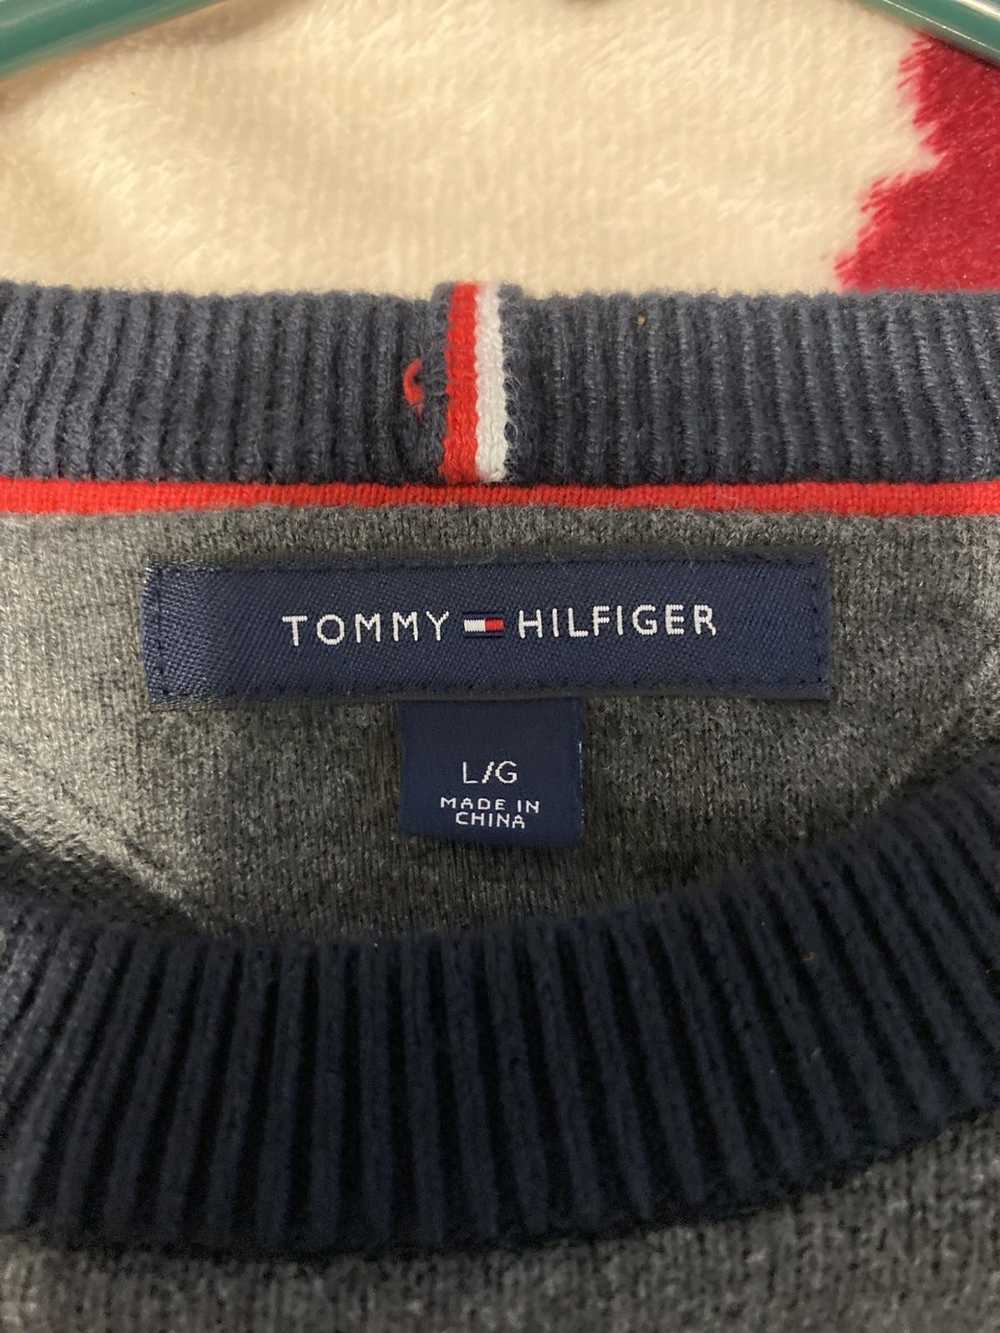 Tommy Hilfiger Tommy Hilfiger sweater - image 3